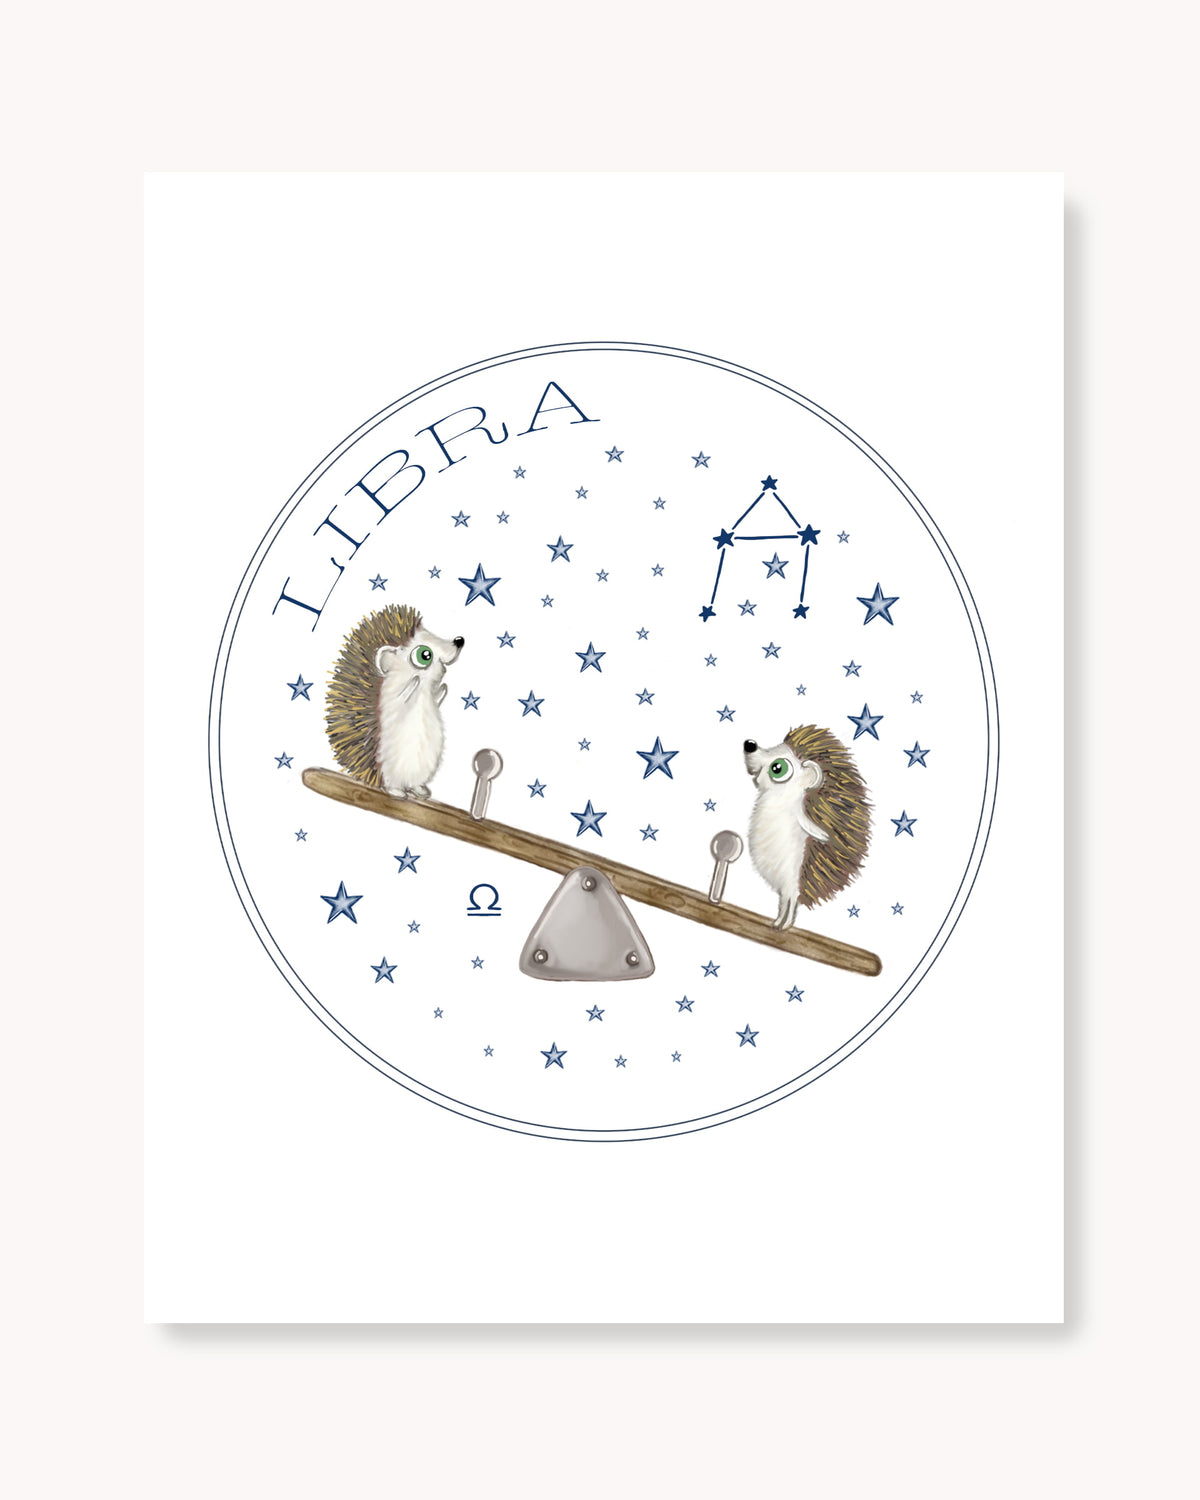 Hand drawn stars zodiac nursery decor wall art poster Libra cute baby hedgehogs on seesaw